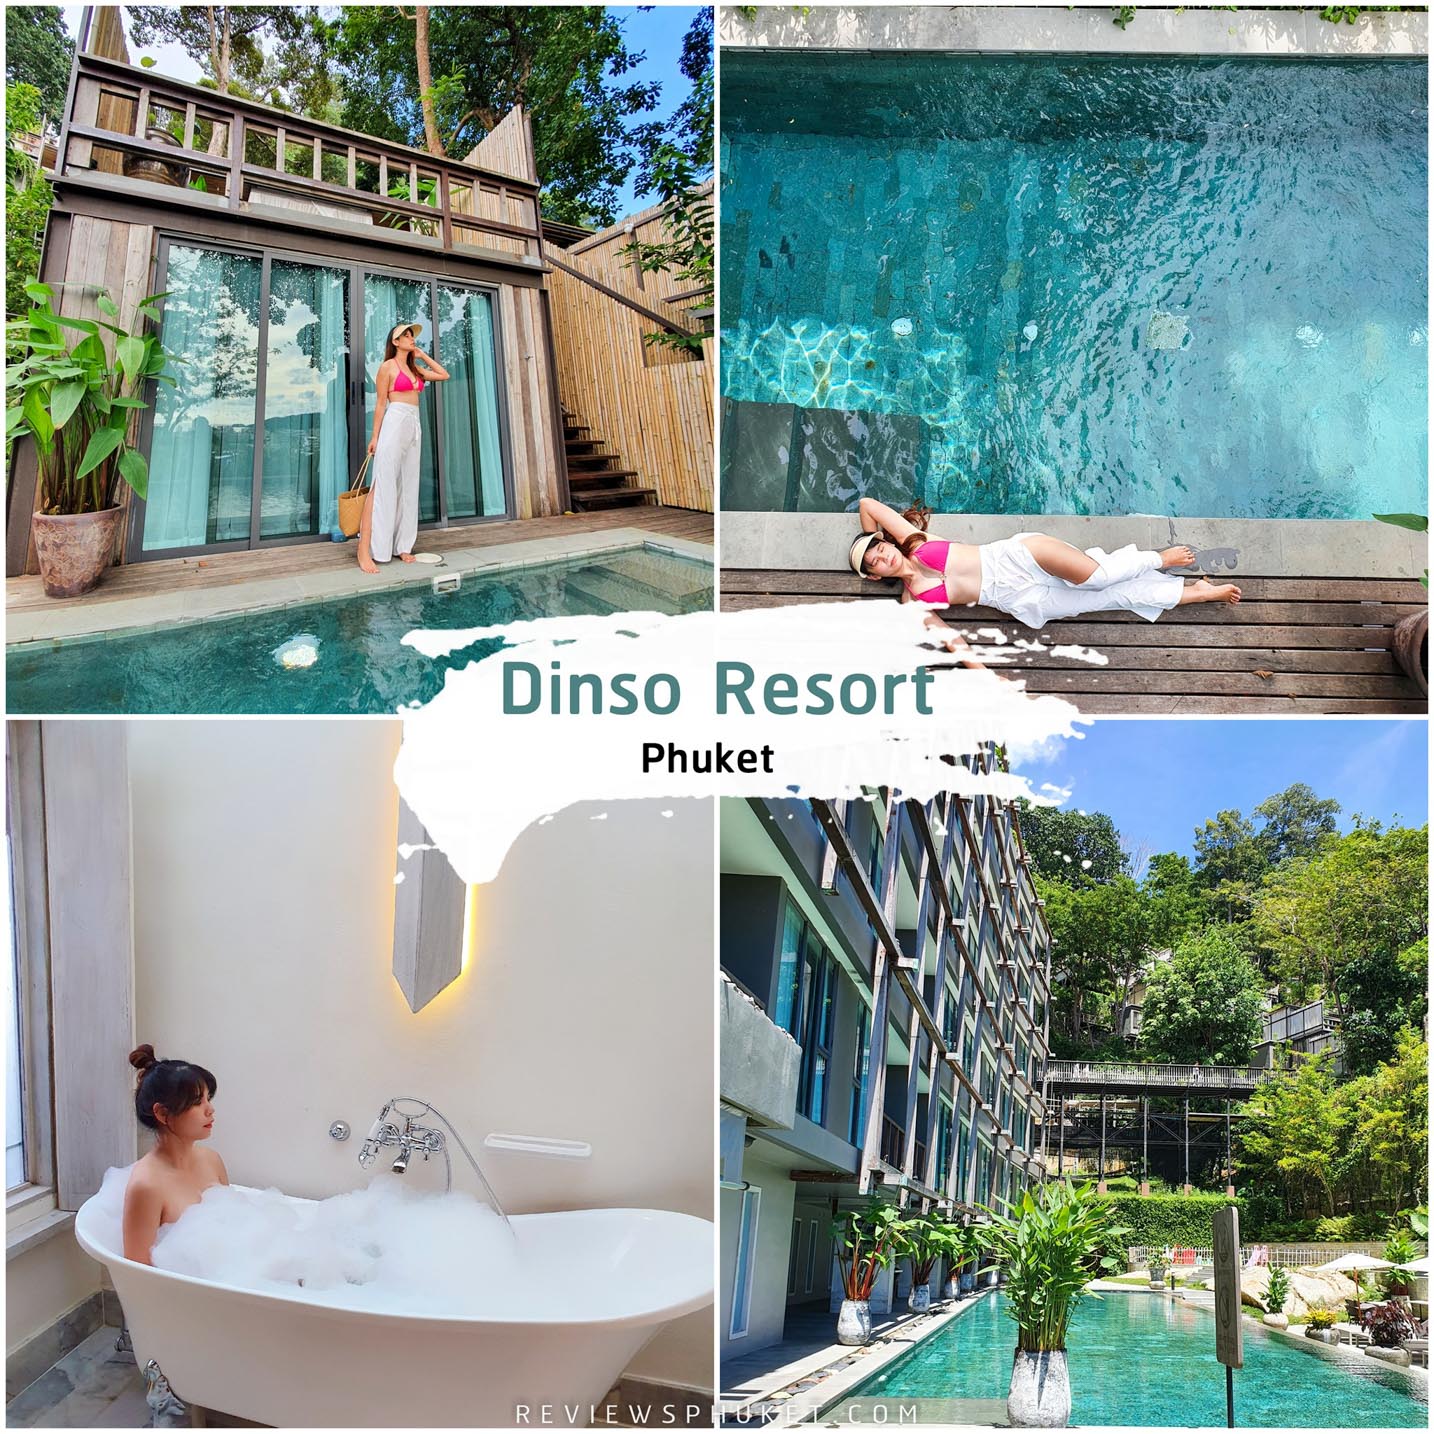 Dinso-Resort-Pool-Villa -บ้านต้นไม้สวยๆภูเก็ตแบบปังๆ-ตั้งอยู่โซนป่าตอง-บรรยากาศชิวๆ-กลางป่า-โรงแรมใช้วัสดุจากไม้มาทำห้องพัก-Type-:-ห้องพักมีดังนี้่--Superior-,-Deluxe-,Family-Suite-Two-Bedroom-,-Penthouse-Triple-Private-Terrace-และ-Pool-Villa-บอกเลยต้องมาเช็คอินน ที่พักภูเก็ต,ที่พักหรู,วิวหลักล้าน,ริมทะเล,โรงแรม,รีสอร์ท,Phuket,หาดสวย,น้ำใส